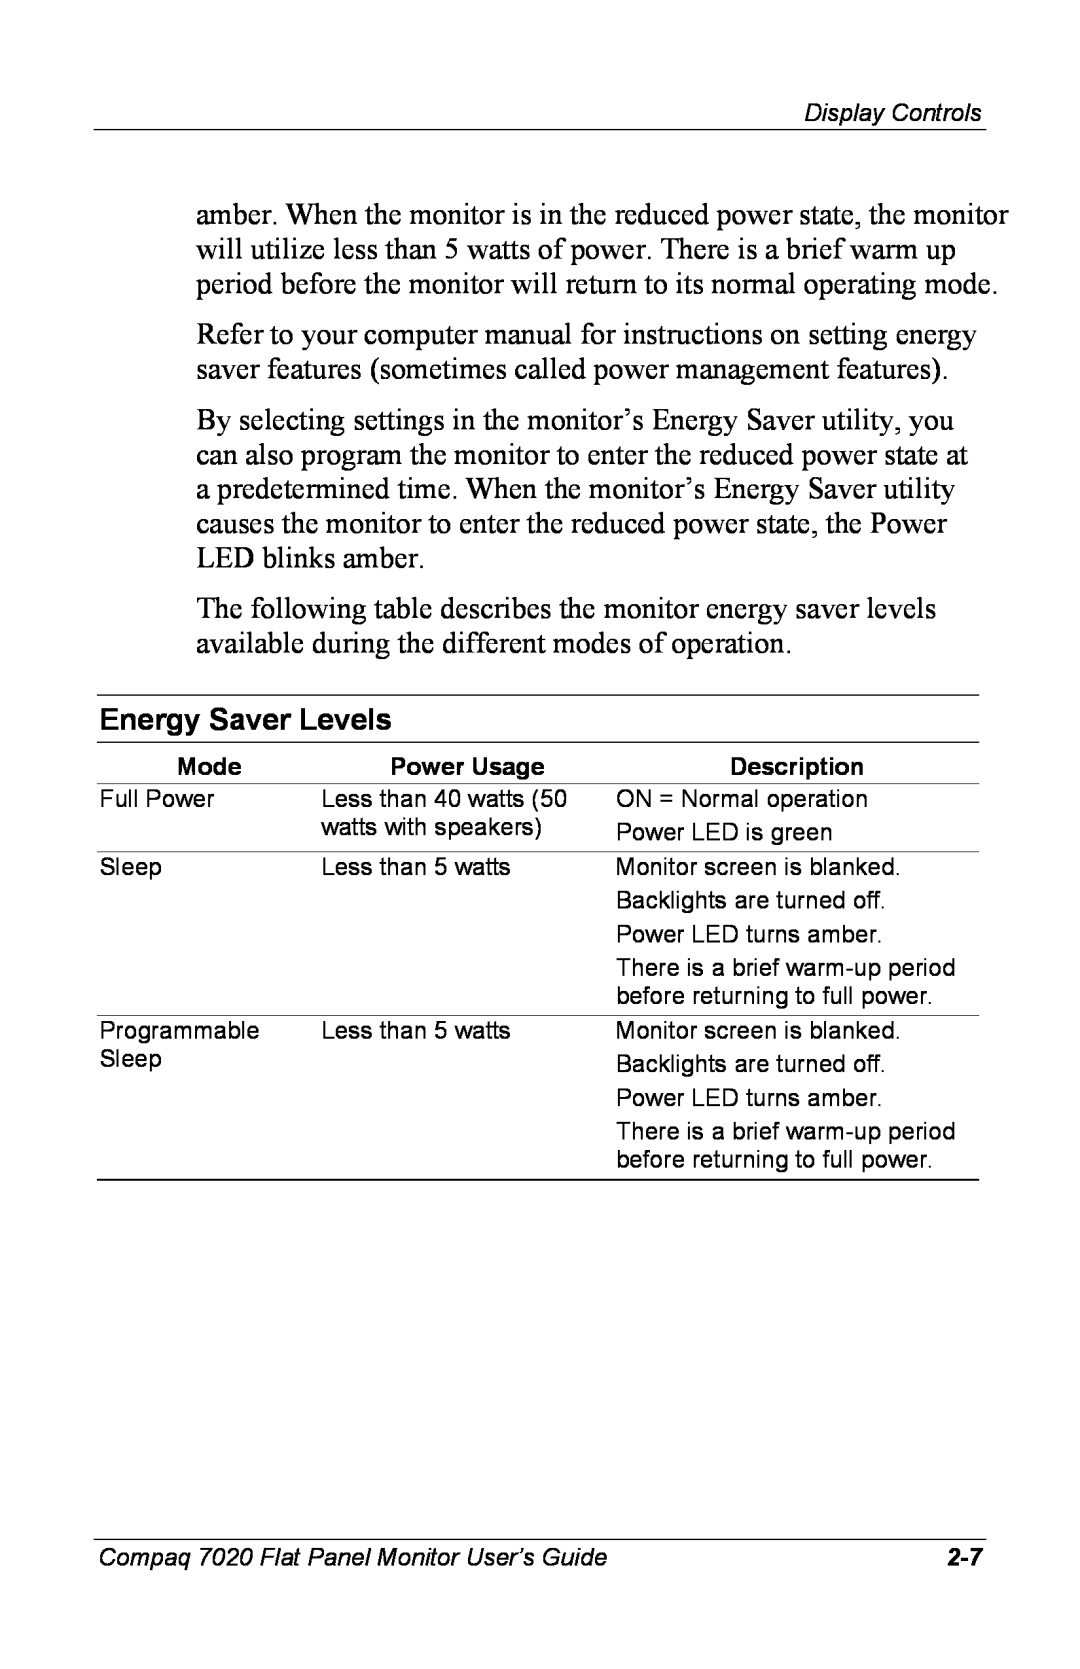 Compaq 7020 manual Energy Saver Levels, Mode, Power Usage, Description 